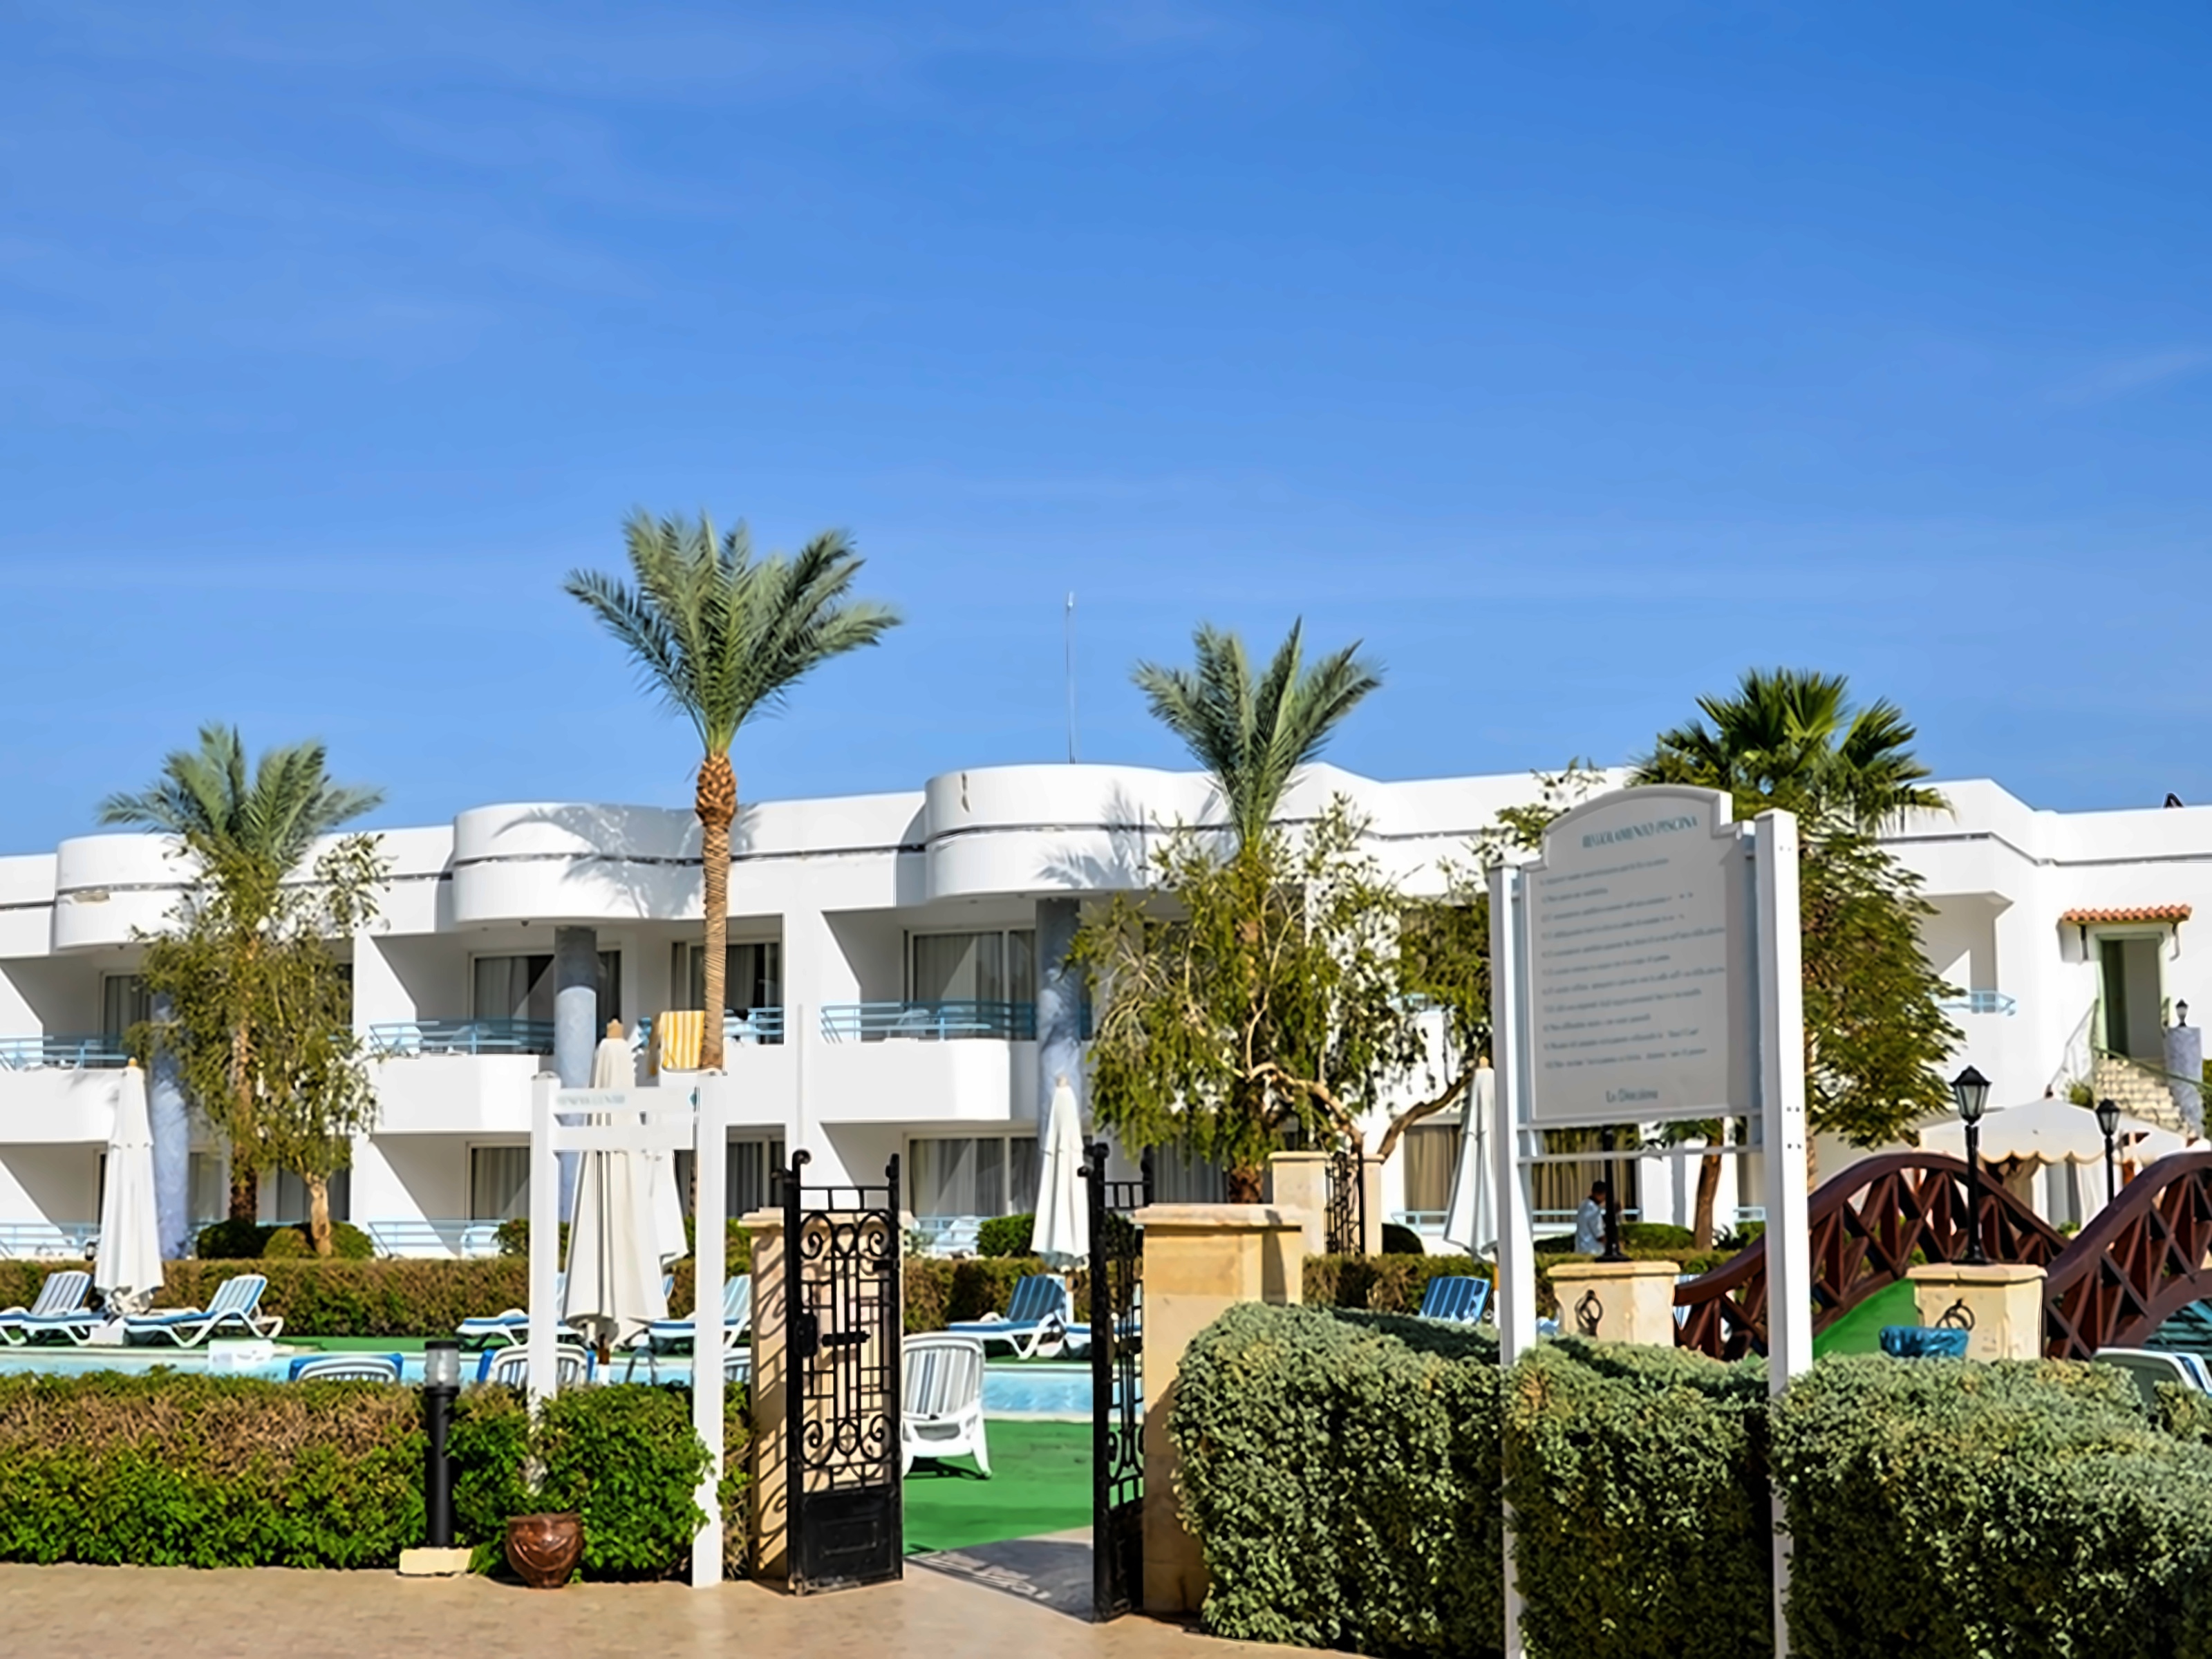 queen sharm resort beach 4 египет шарм эль шейх отель